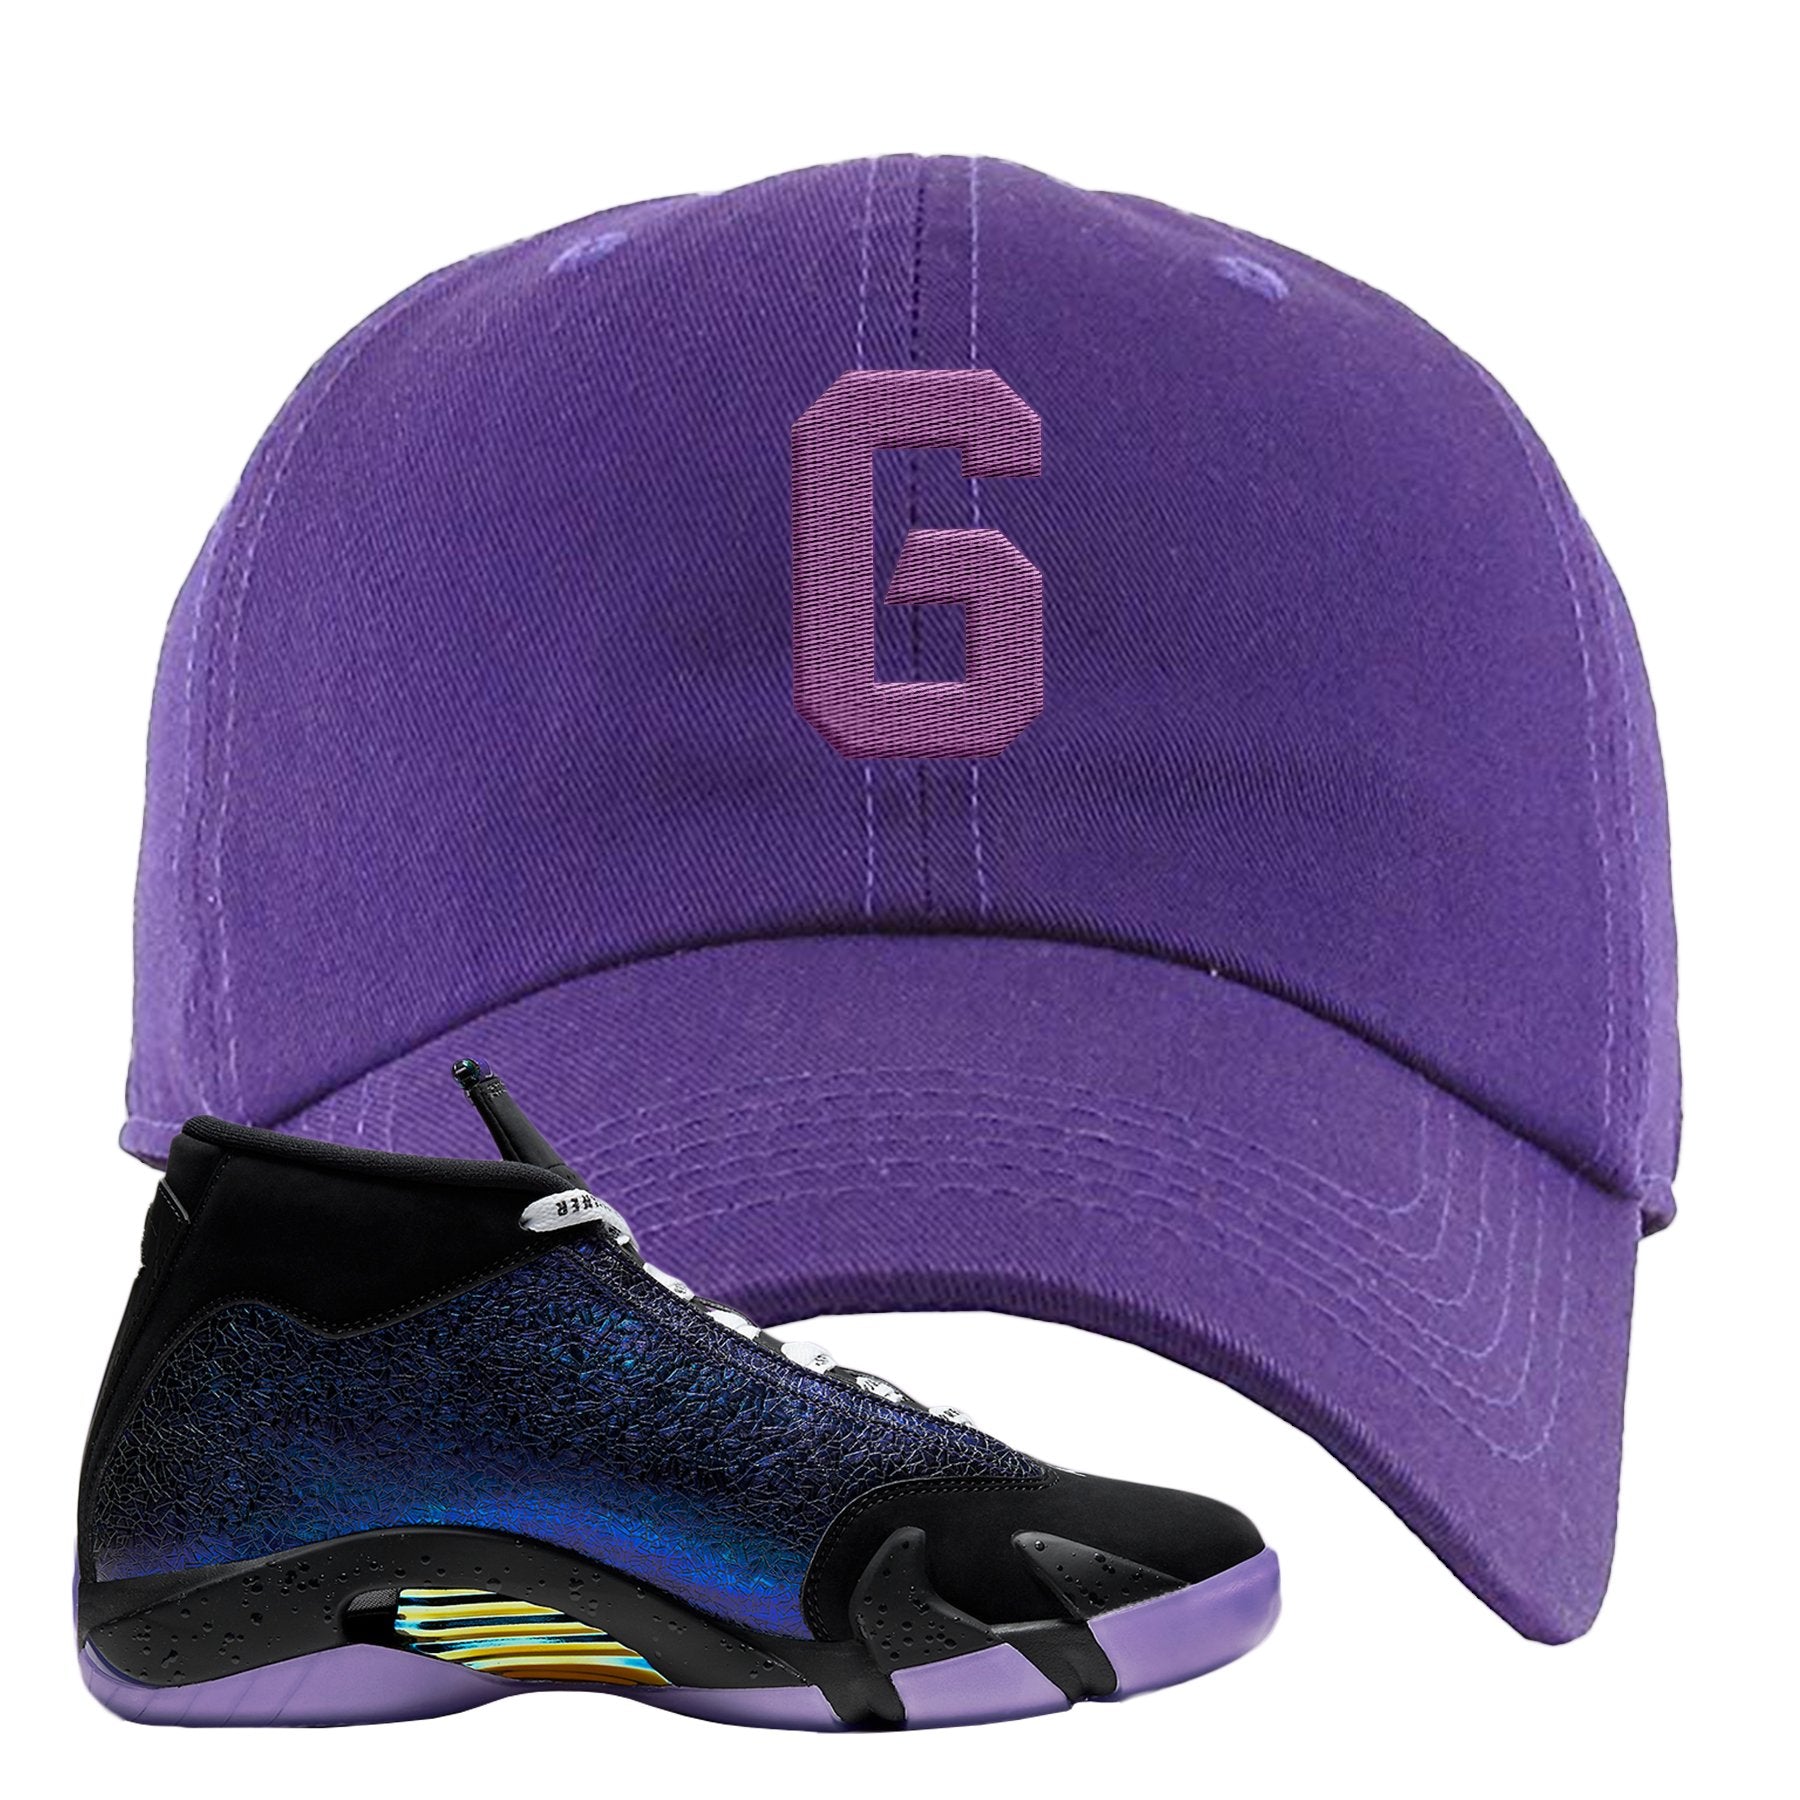 Doernbecher 14s Dad Hat | Number 6, Purple